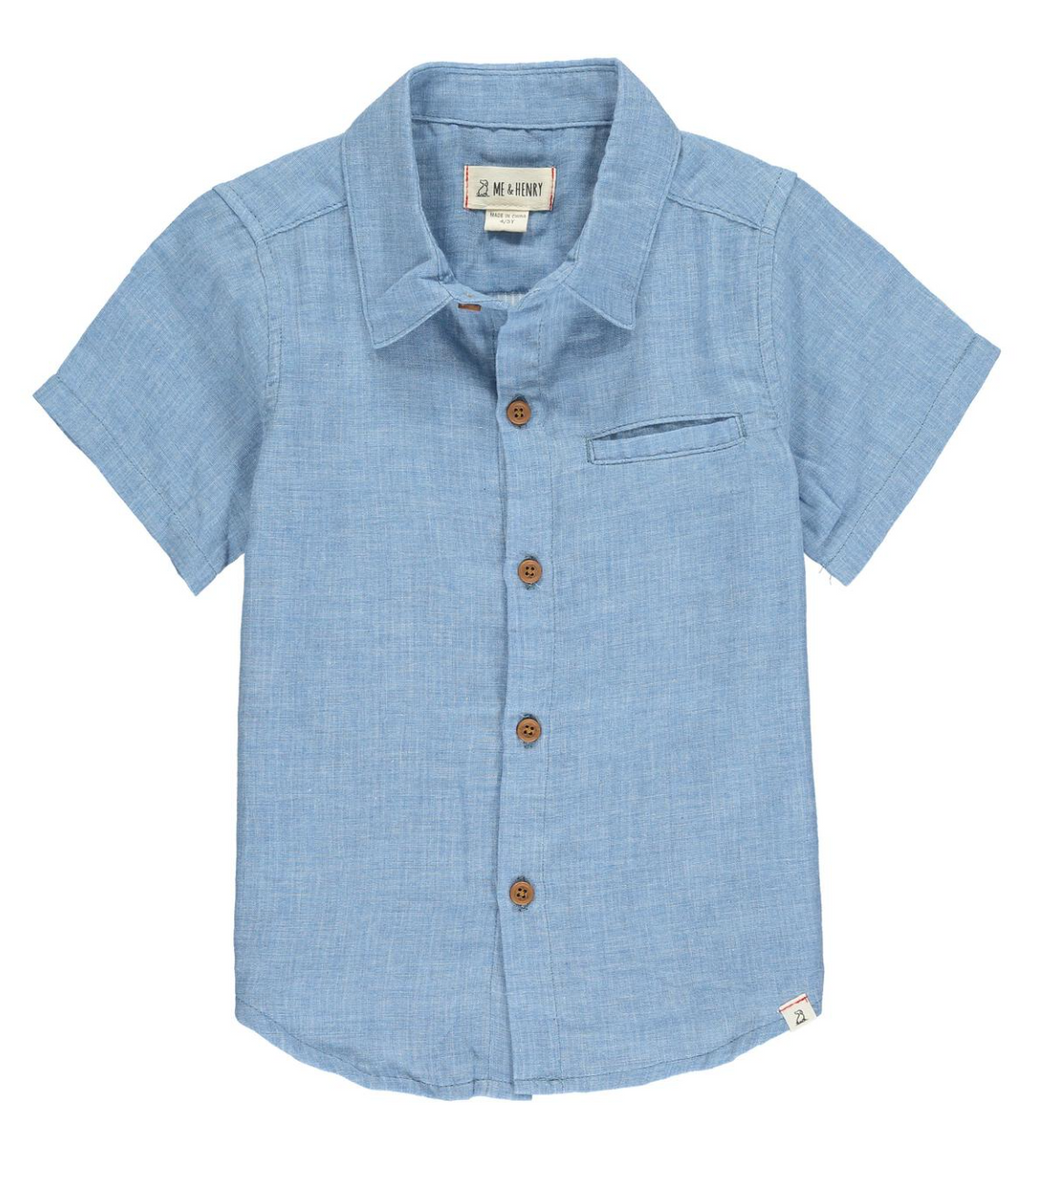 Newport Short Sleeve Button Down Woven Shirt - Pale Blue Size 6/7Y